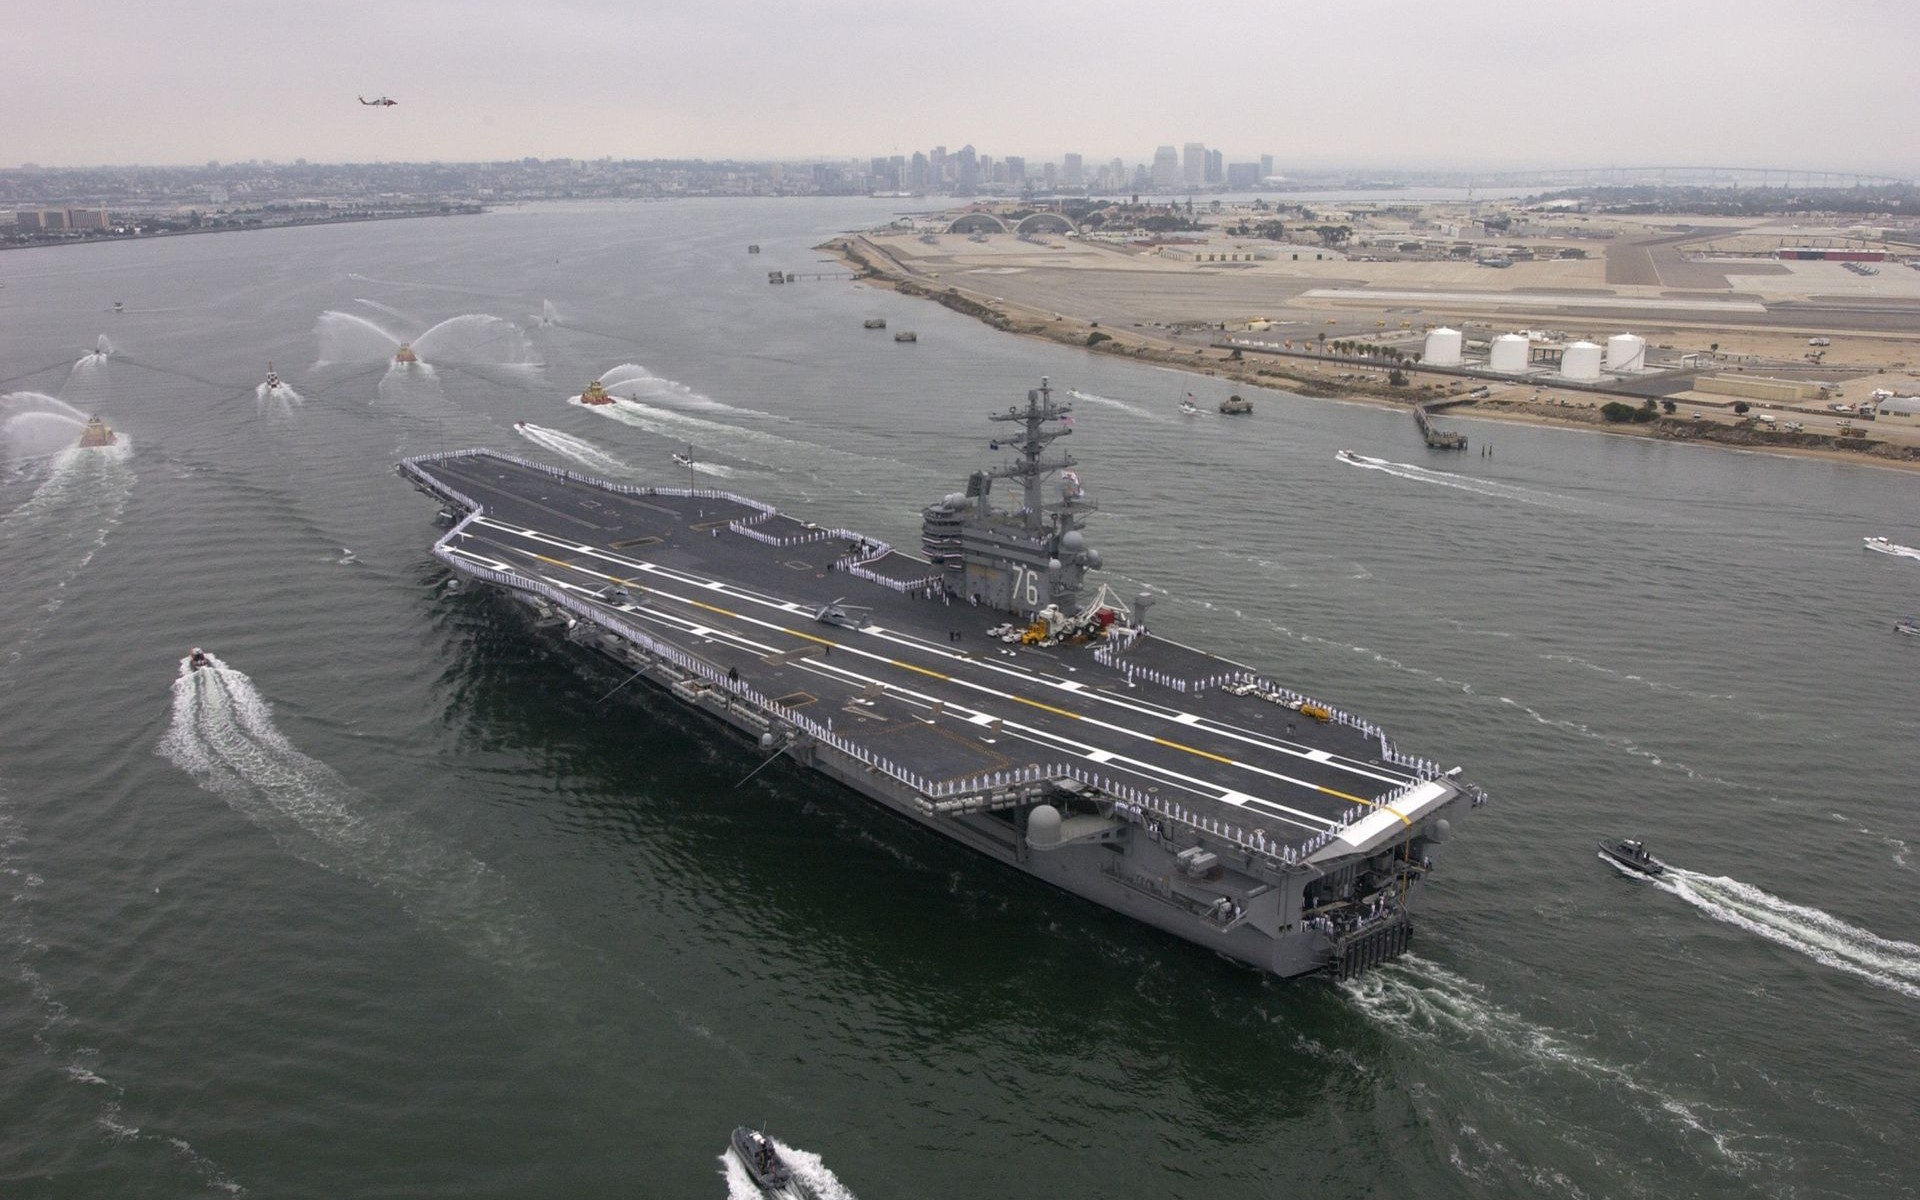 military, uss ronald reagan (cvn 76), aircraft carrier, warship, warships